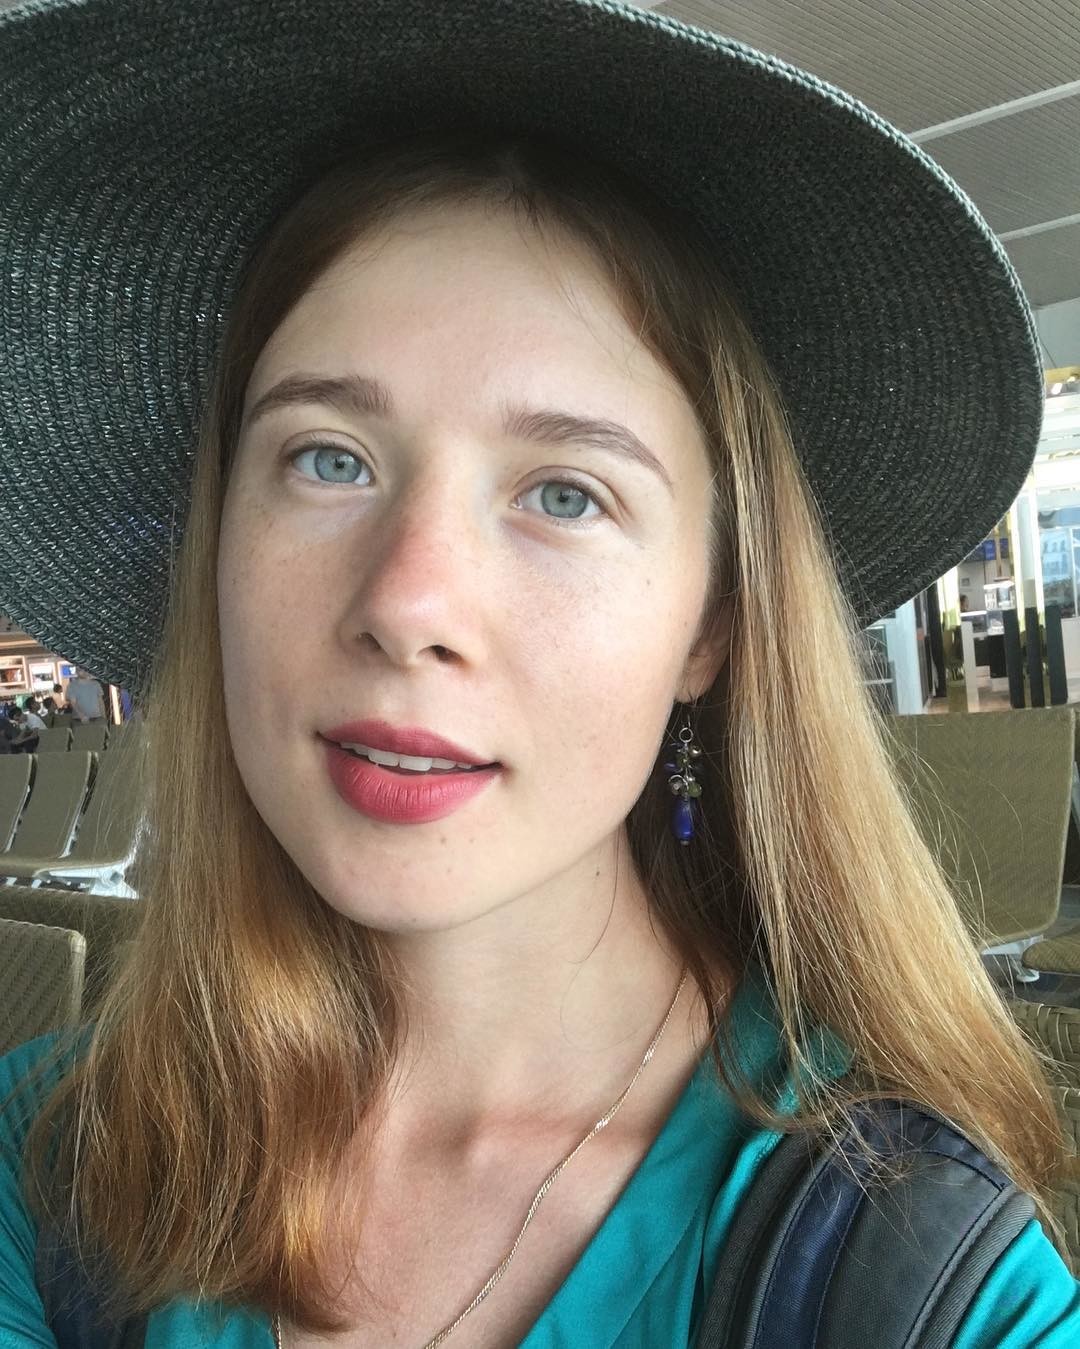 Tatiana (24) berasal dari Tver, sekitar tiga jam dari Moskow. Ia lulus dari Institut Negeri Hubungan Internasional Moskow (MGIMO) dan fasih berbahasa Indonesia. Kini, ia tinggal di Singapura bersama suaminya.